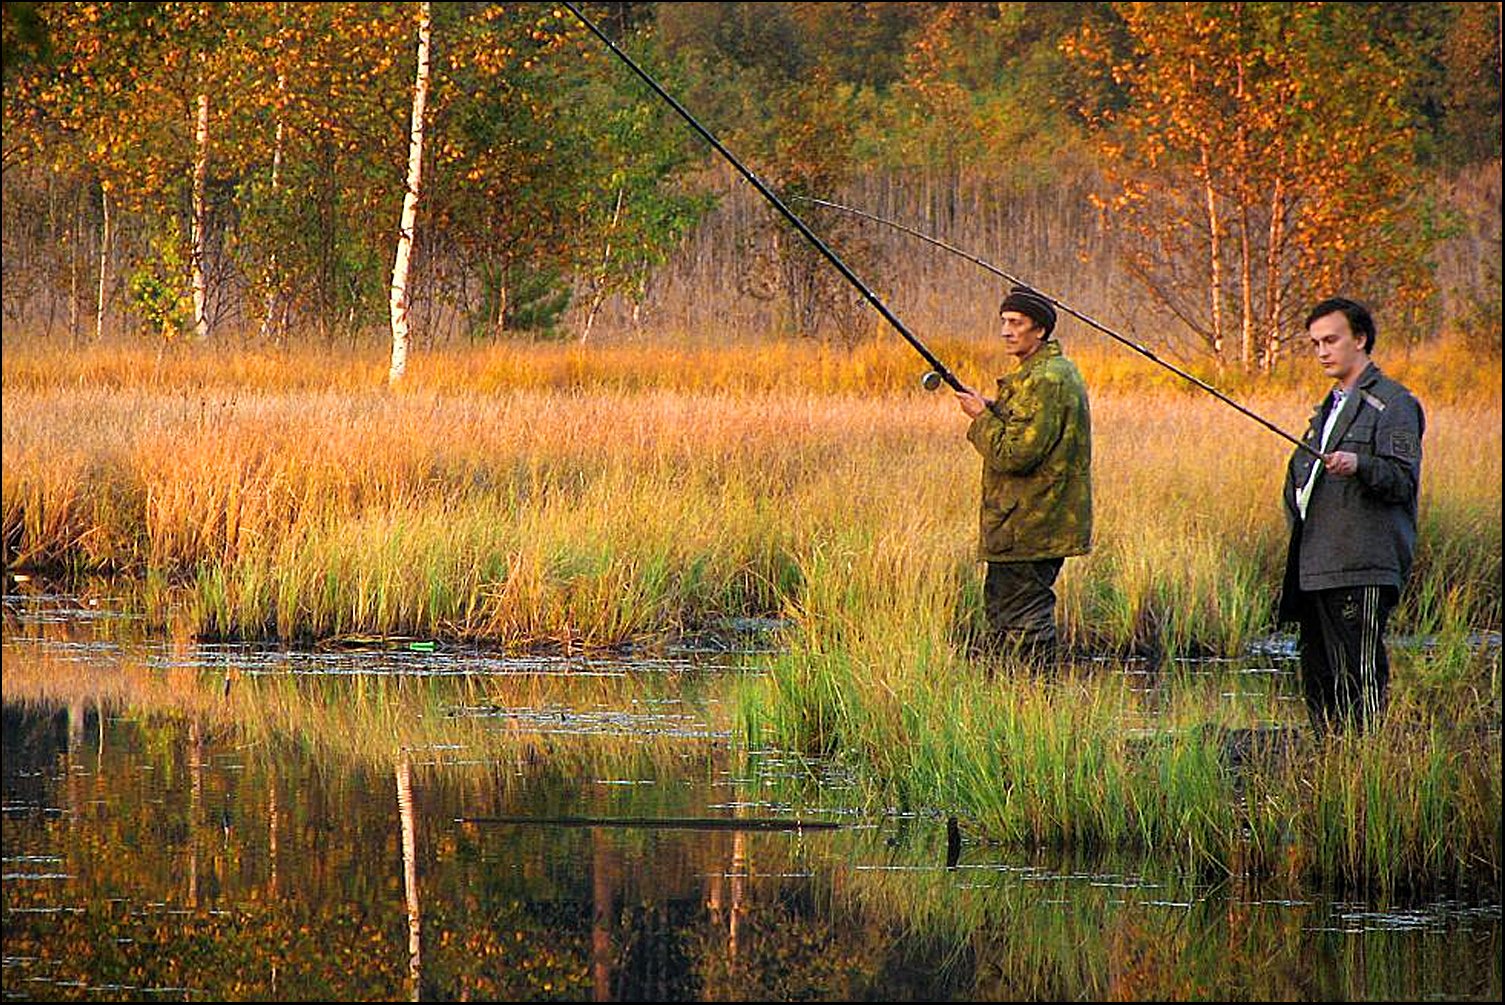 Братья ловят рыбу. Рыбалка. Осень рыбалка. Природа рыбалка. Рыбак на берегу реки.